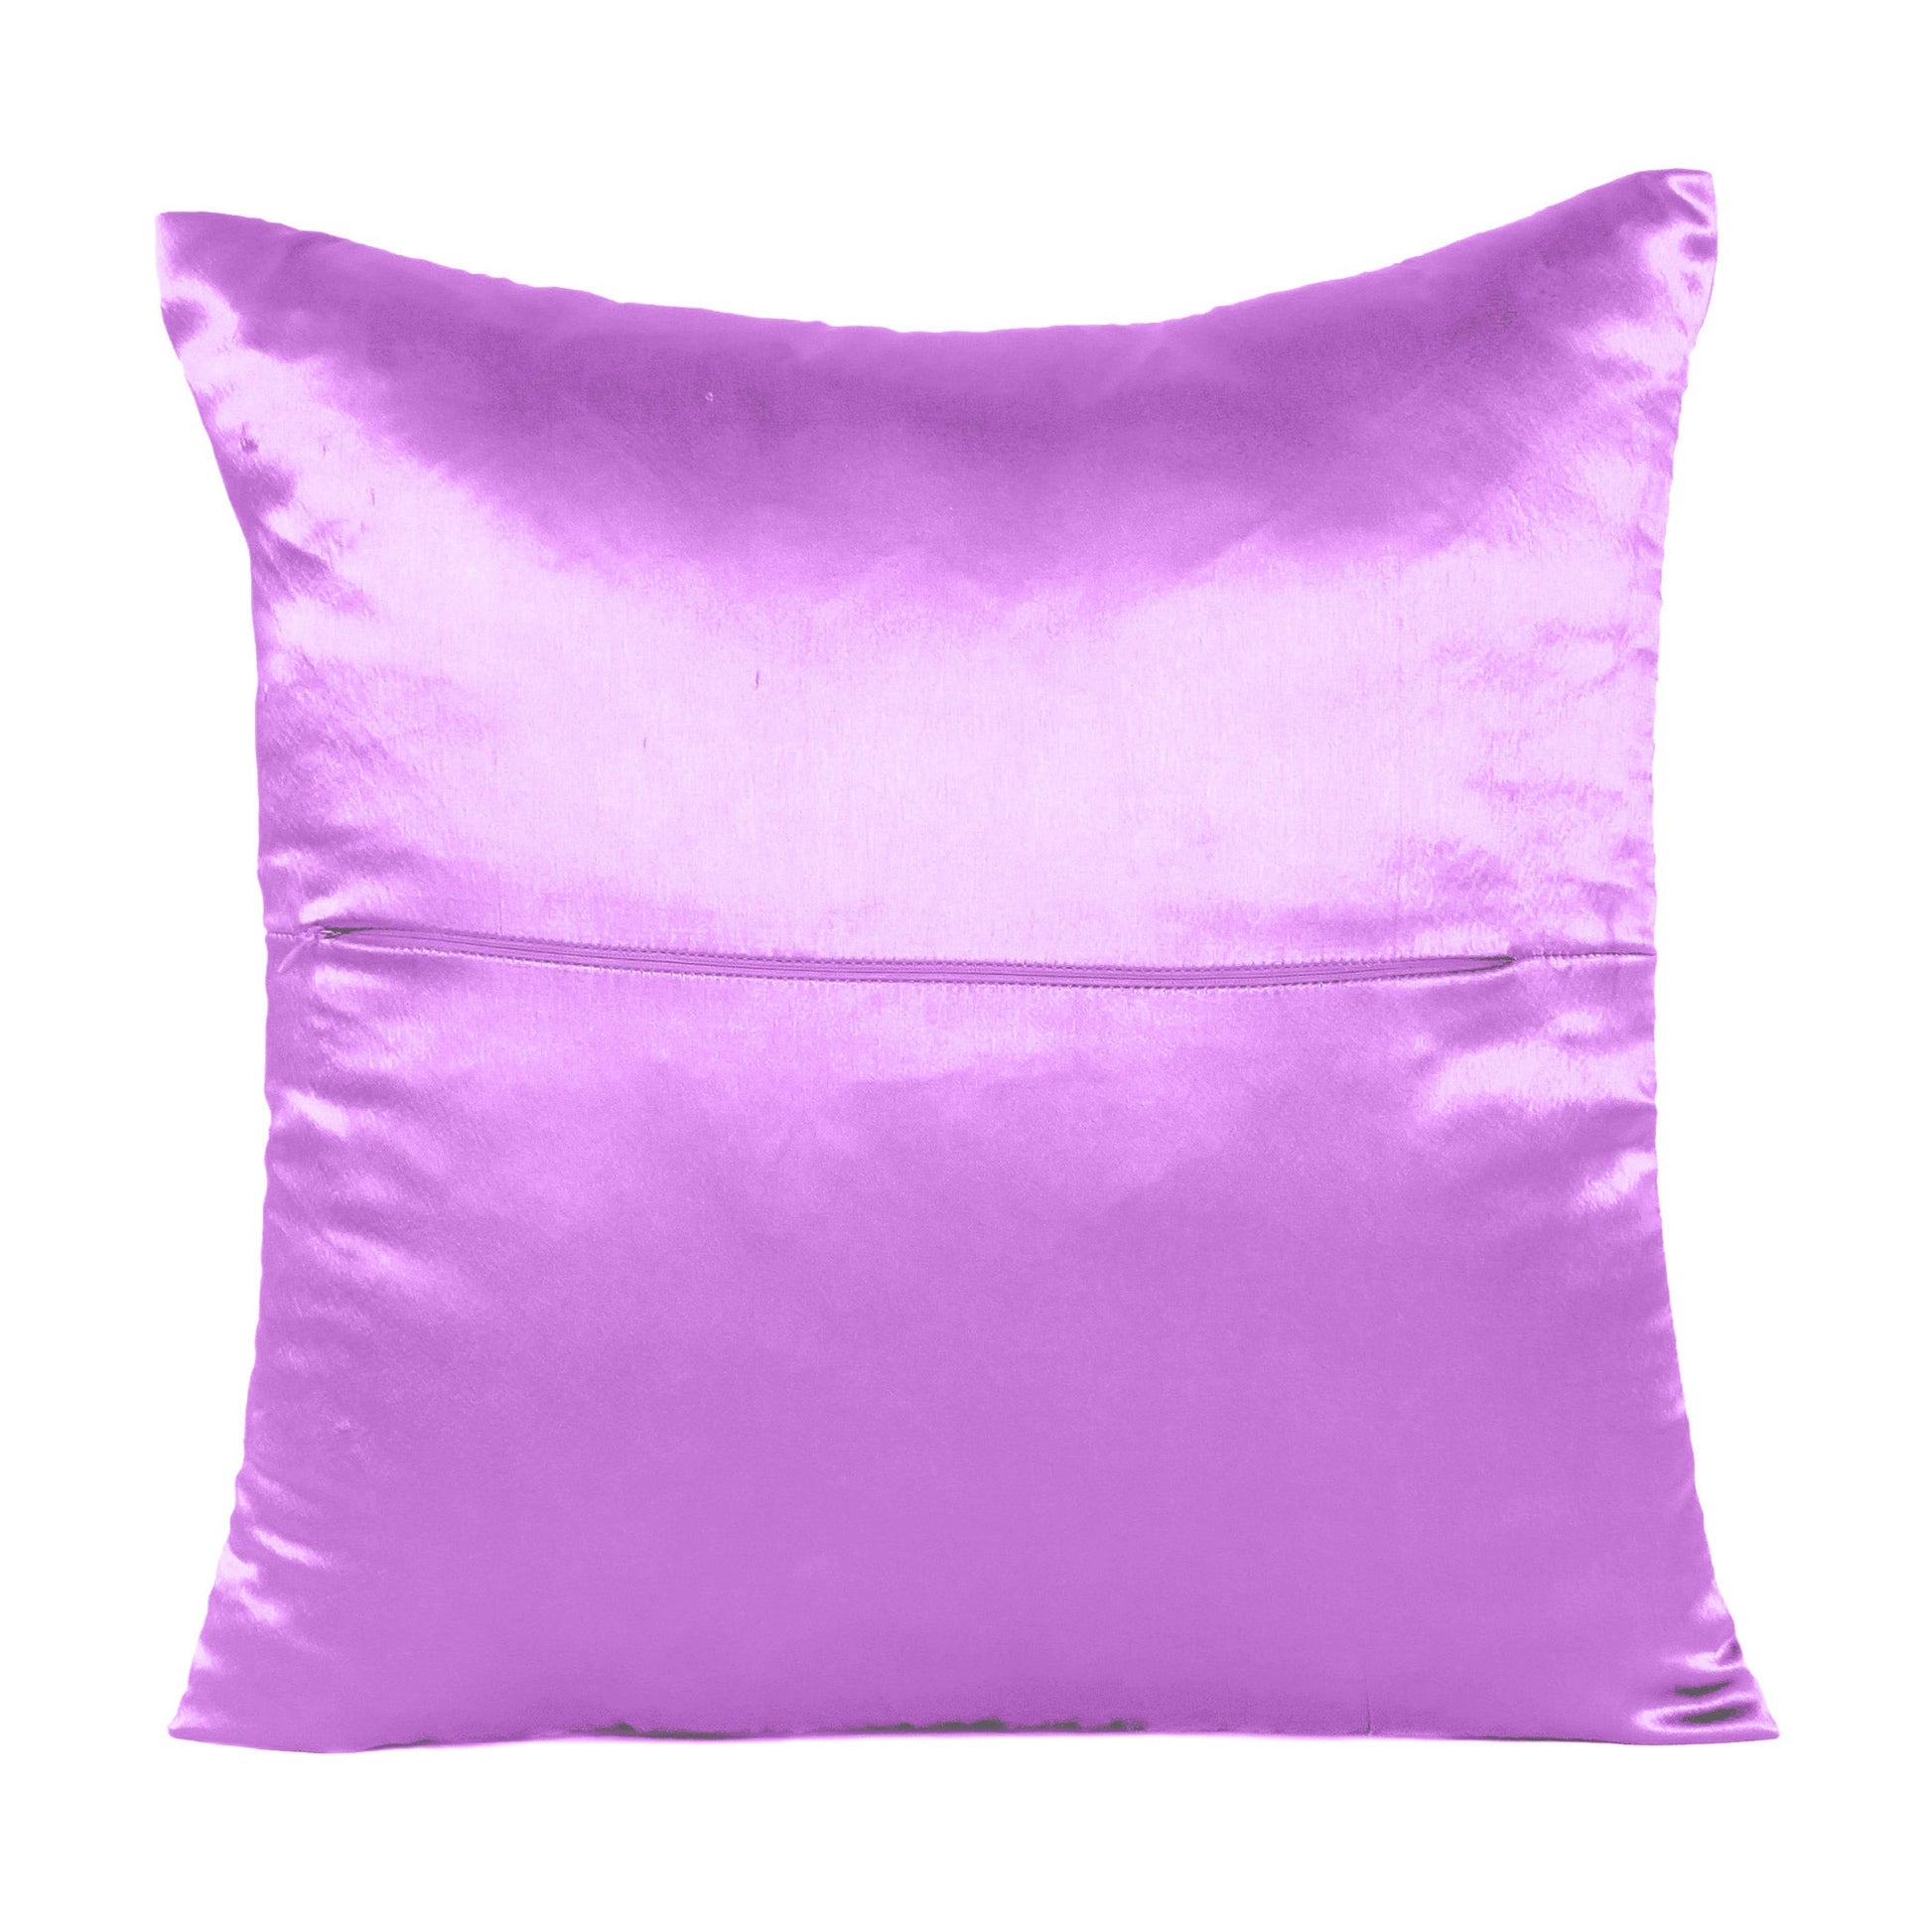 Luxury Soft Plain Satin Silk Cushion Cover in Set of 2 - Hyacinth Violet